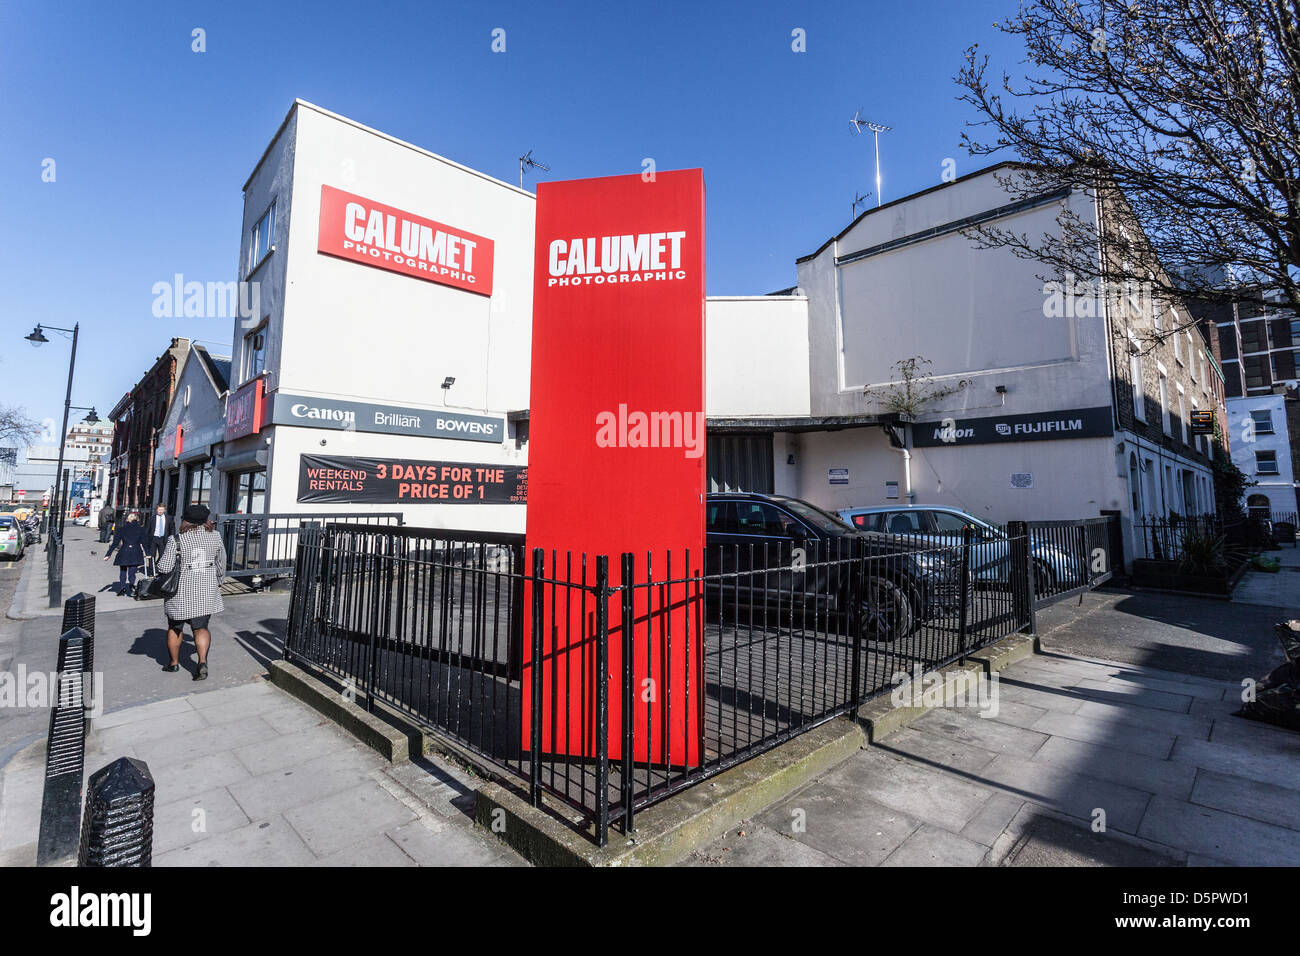 Calumet Photographic Store, London, England, UK Stockfoto